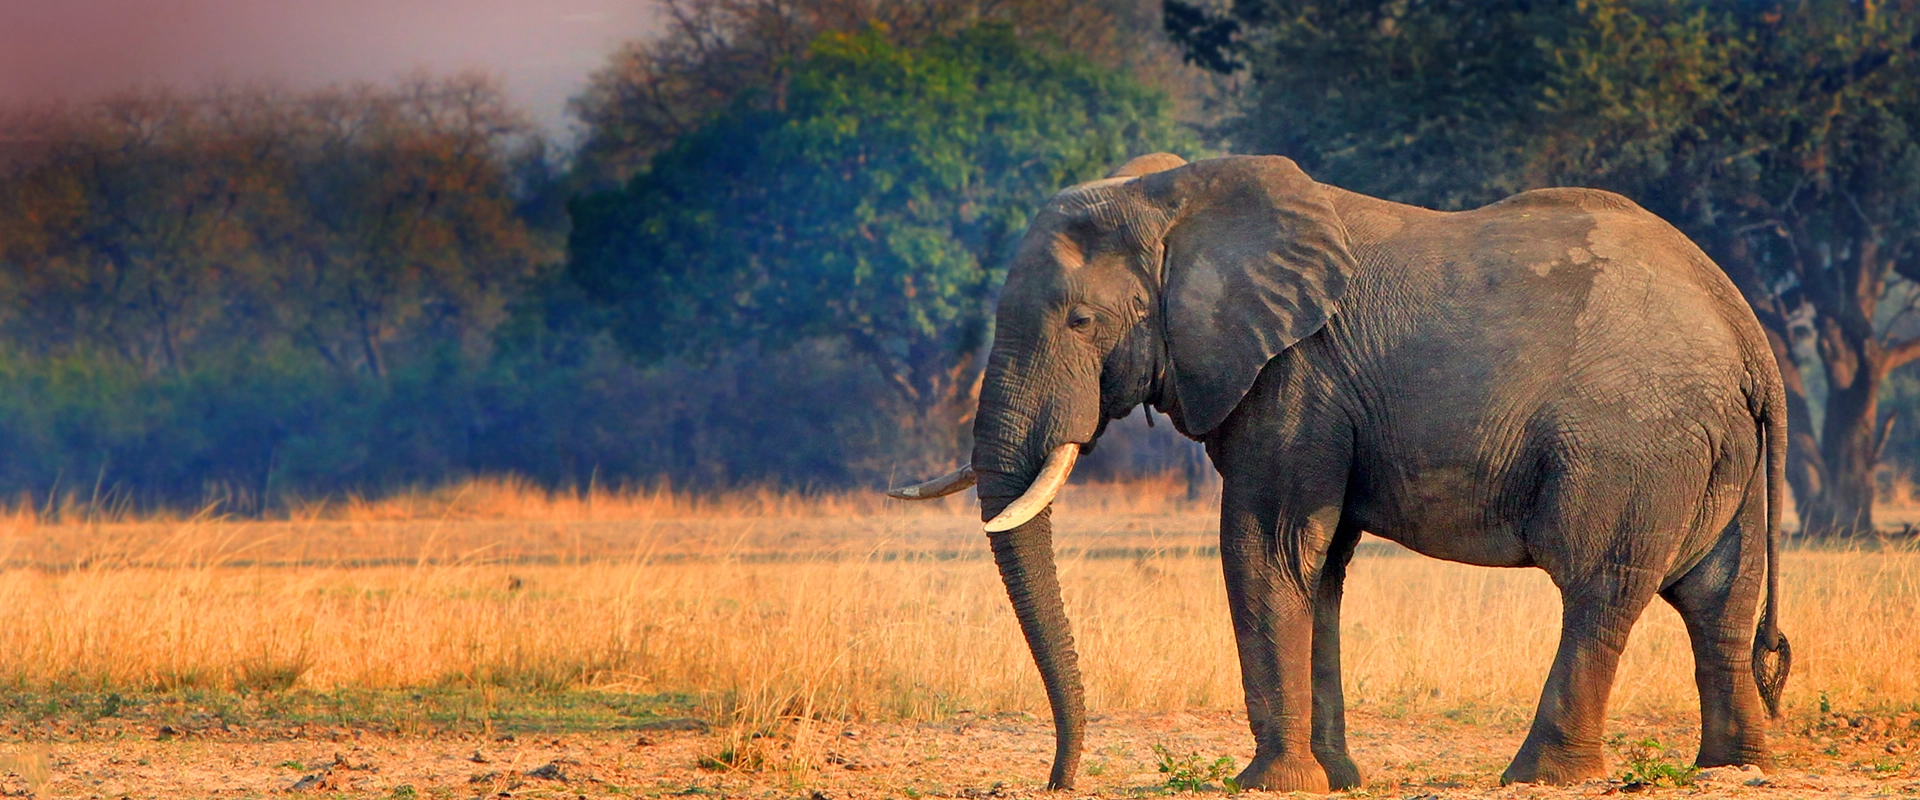 voyage zambie parc kafue elephant